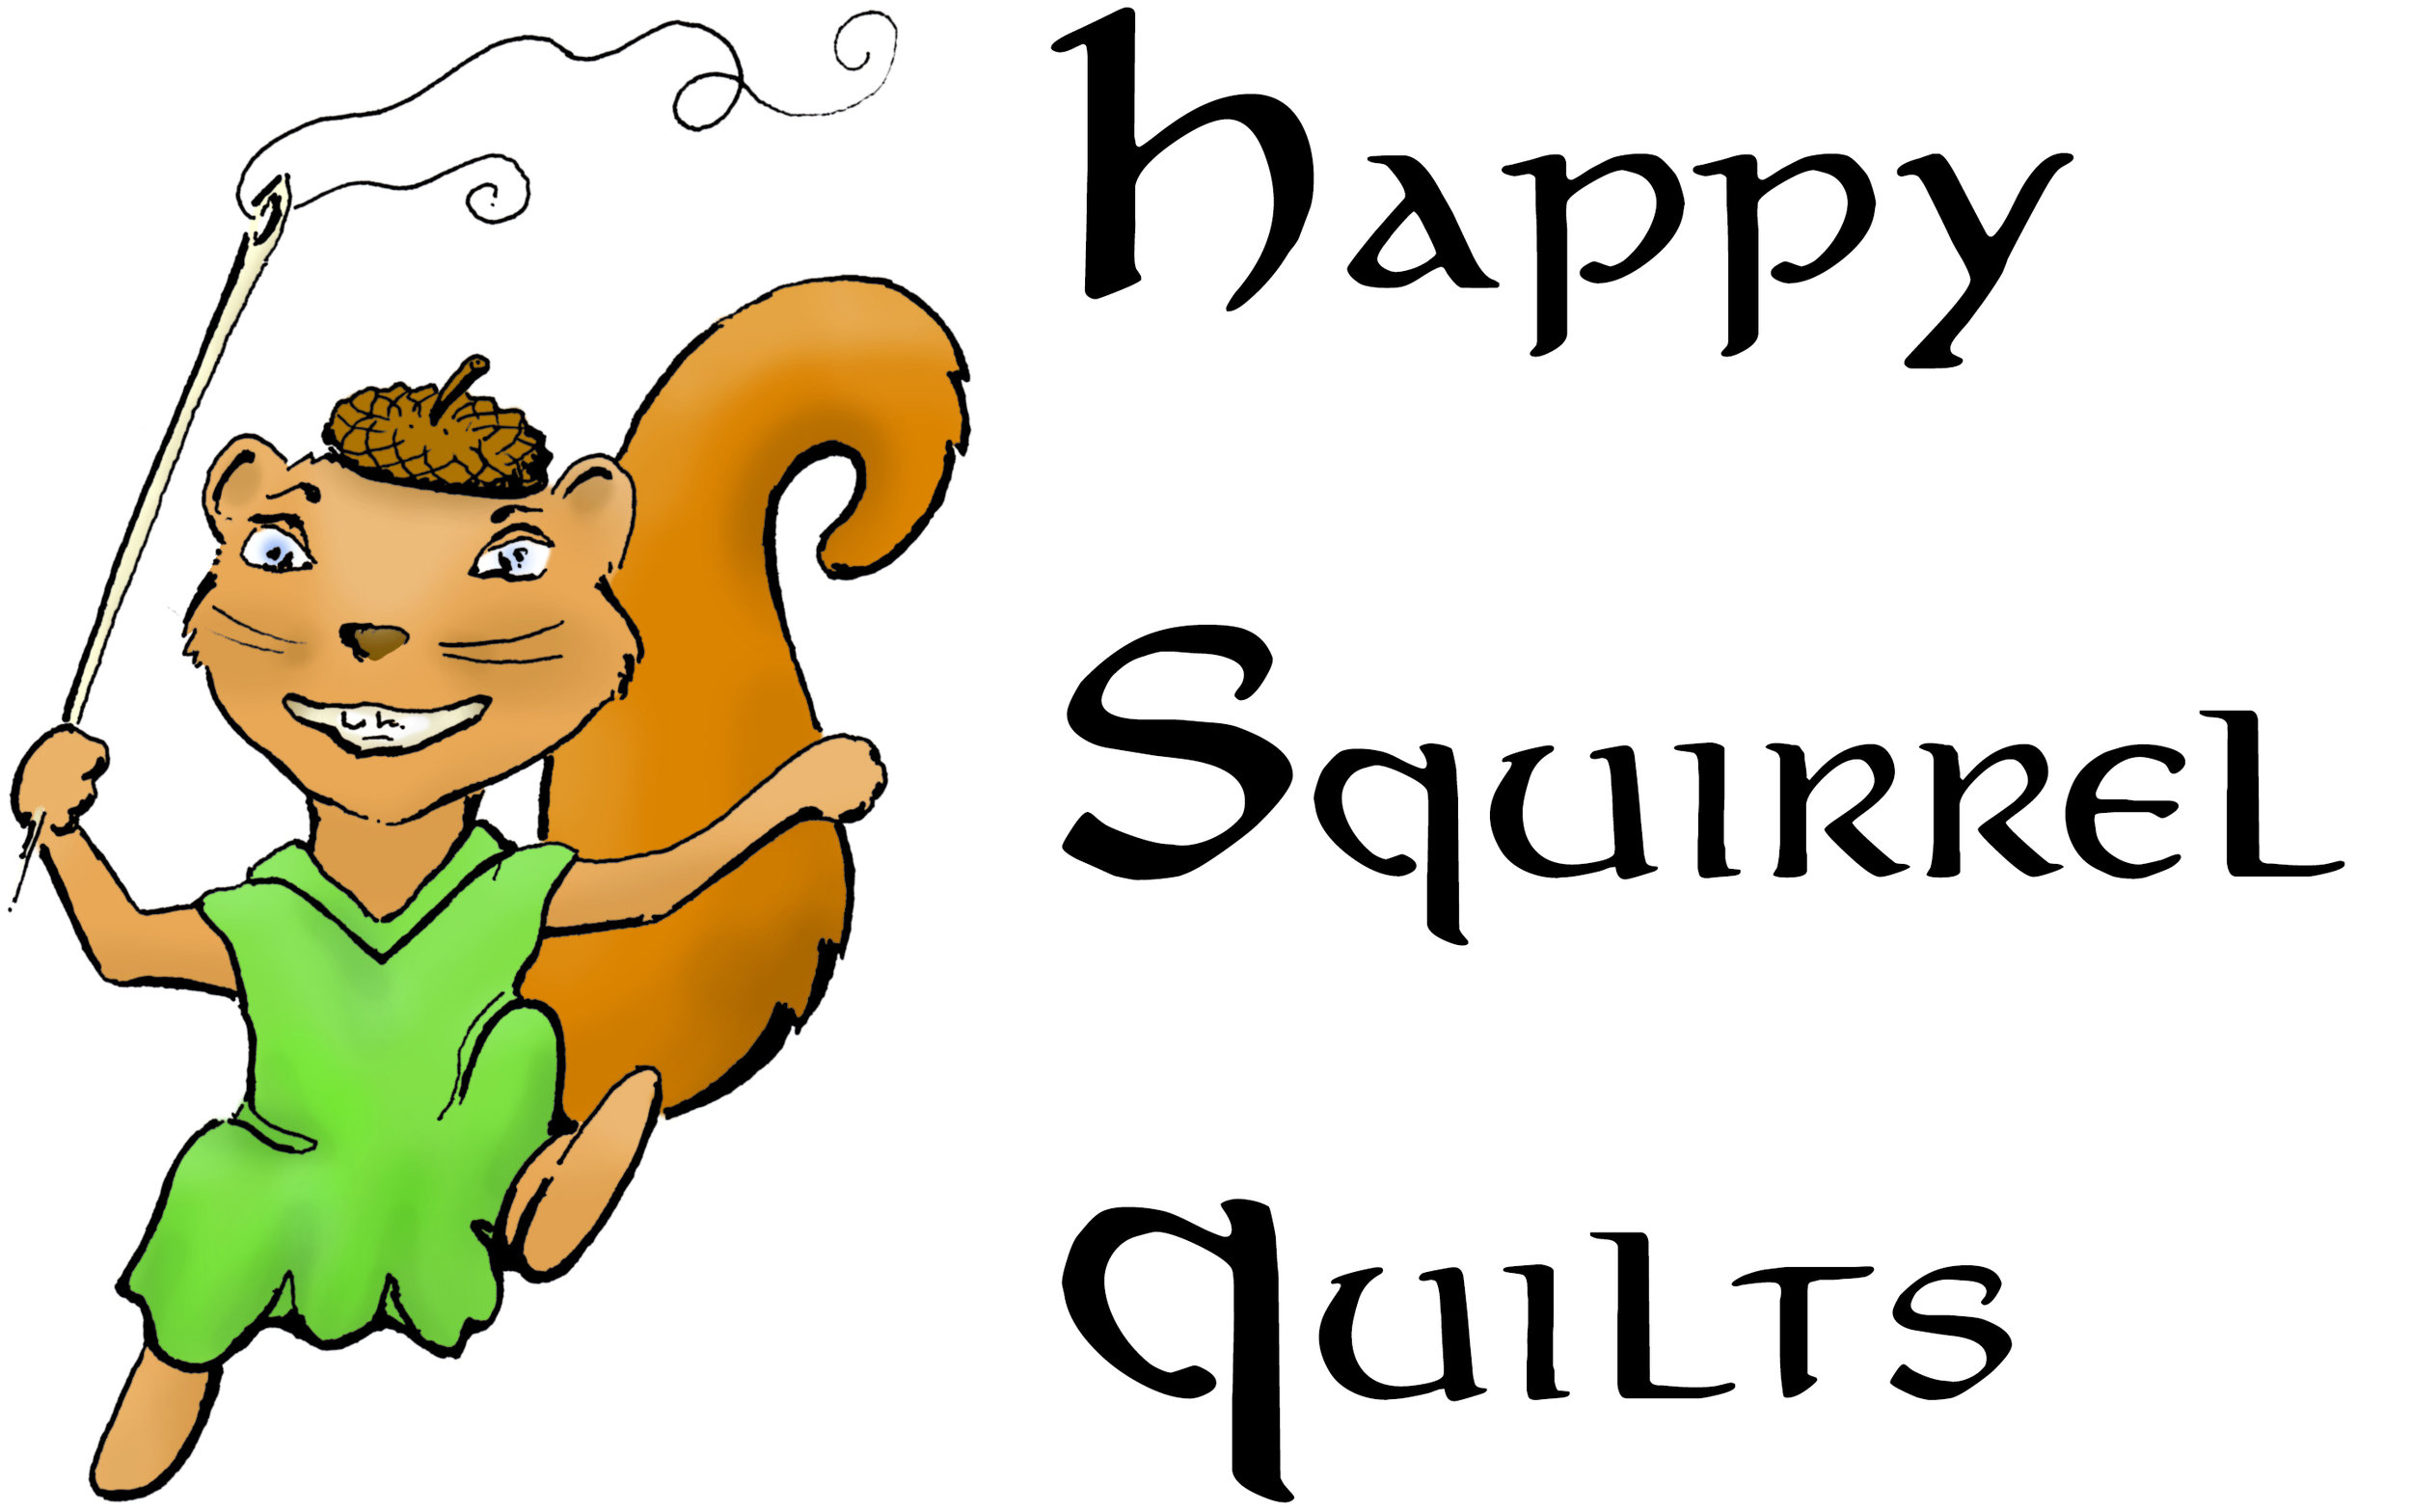 Happy Squirrel Quilts